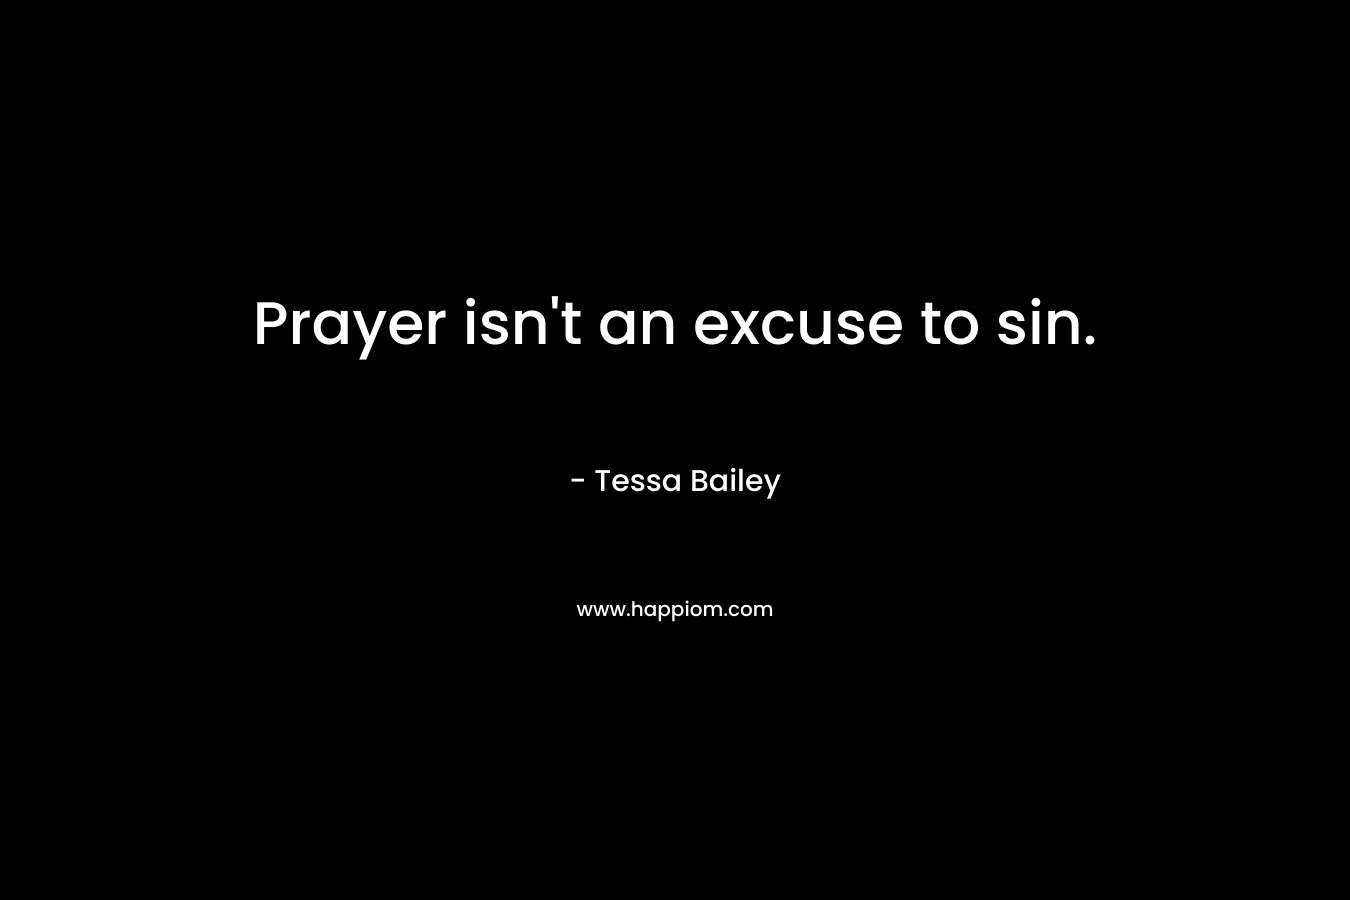 Prayer isn't an excuse to sin.